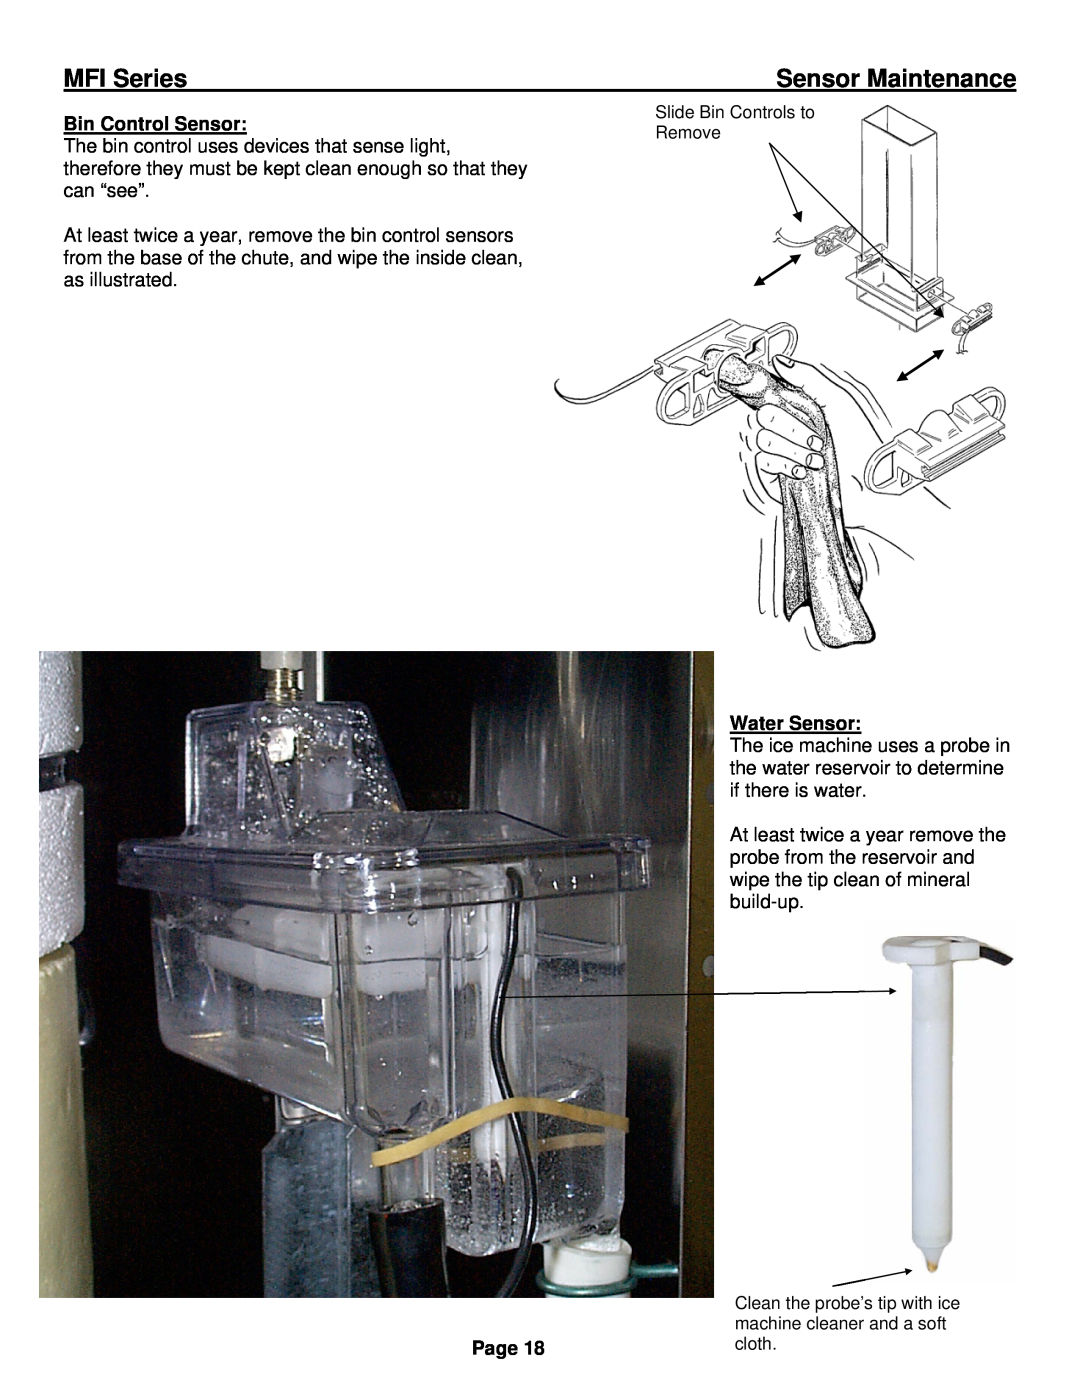 Ice-O-Matic installation manual Sensor Maintenance, Bin Control Sensor, Water Sensor, MFI Series, Page 